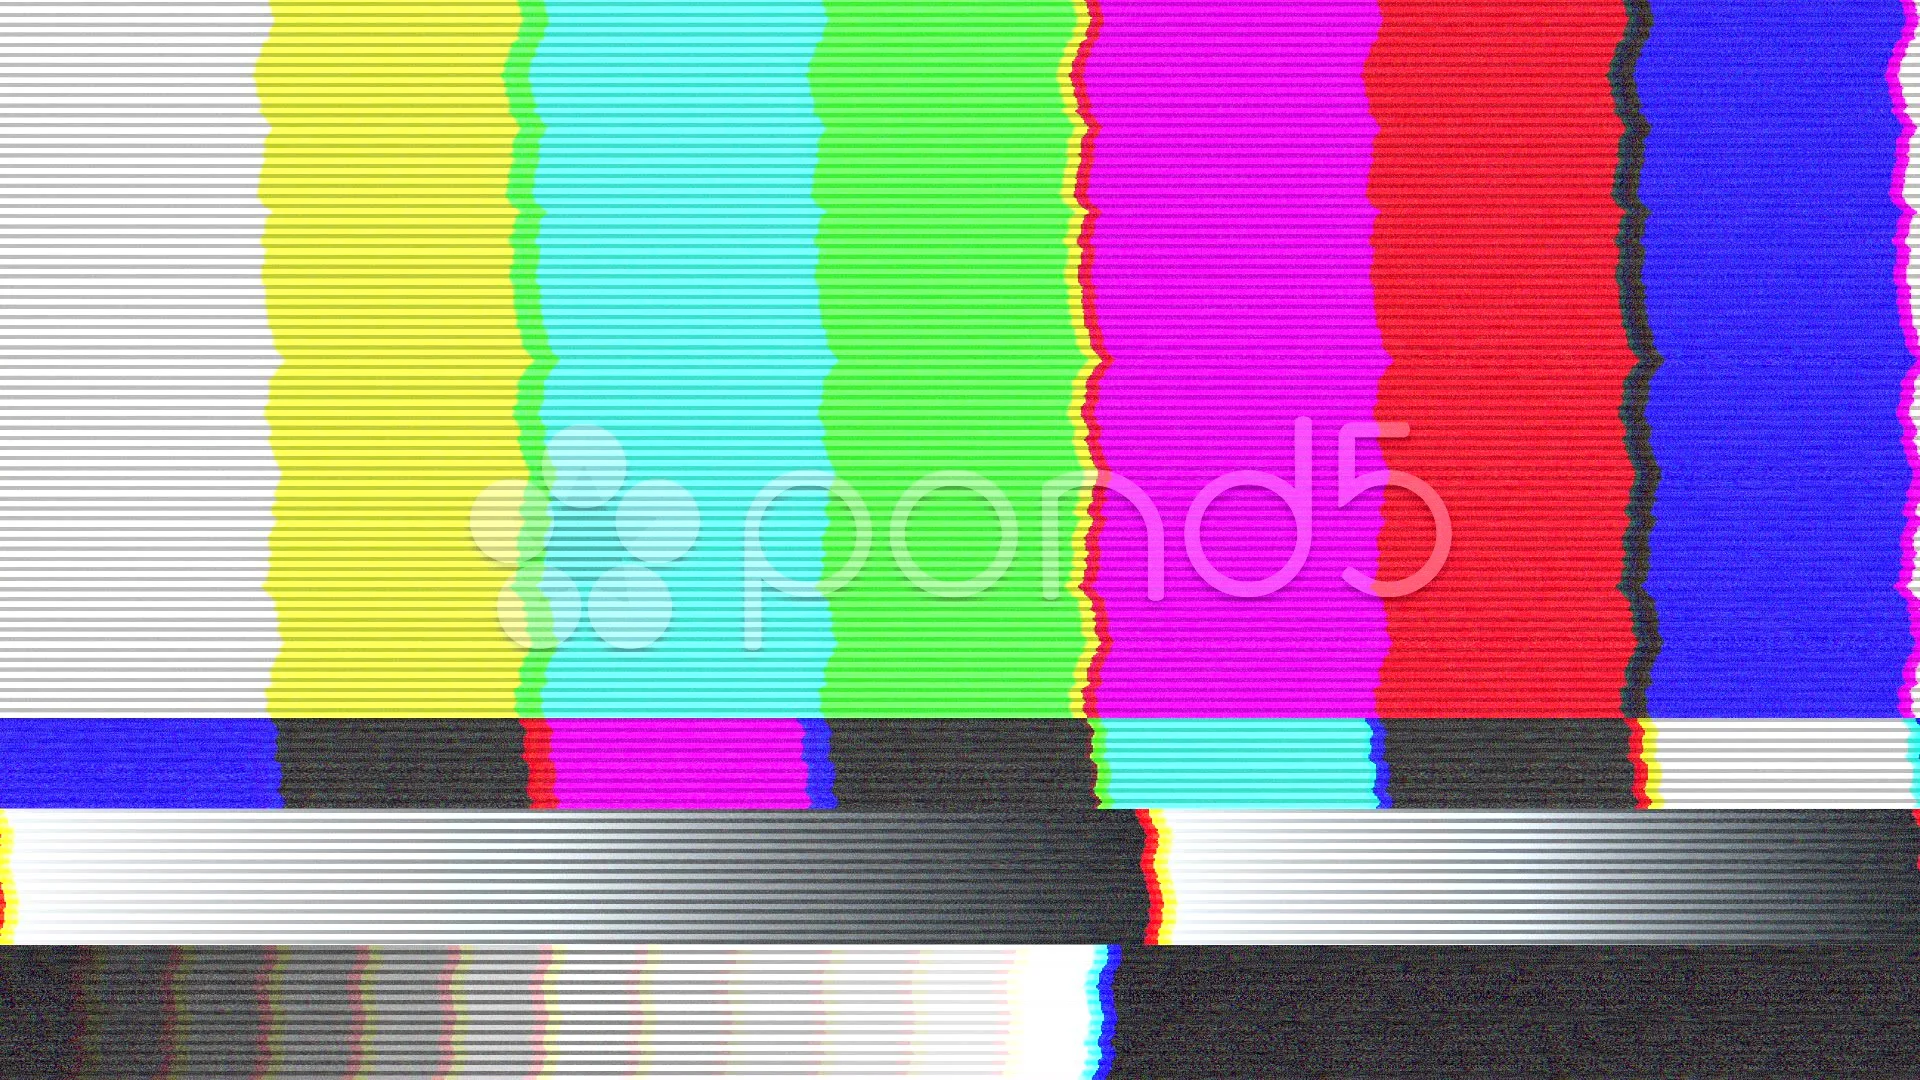 Зависает изображение телевизоре. Полоски на телевизоре. Цветные полосы на телевизоре. Разноцветные полосы на телевизоре. Разноцветные полоски на экране.